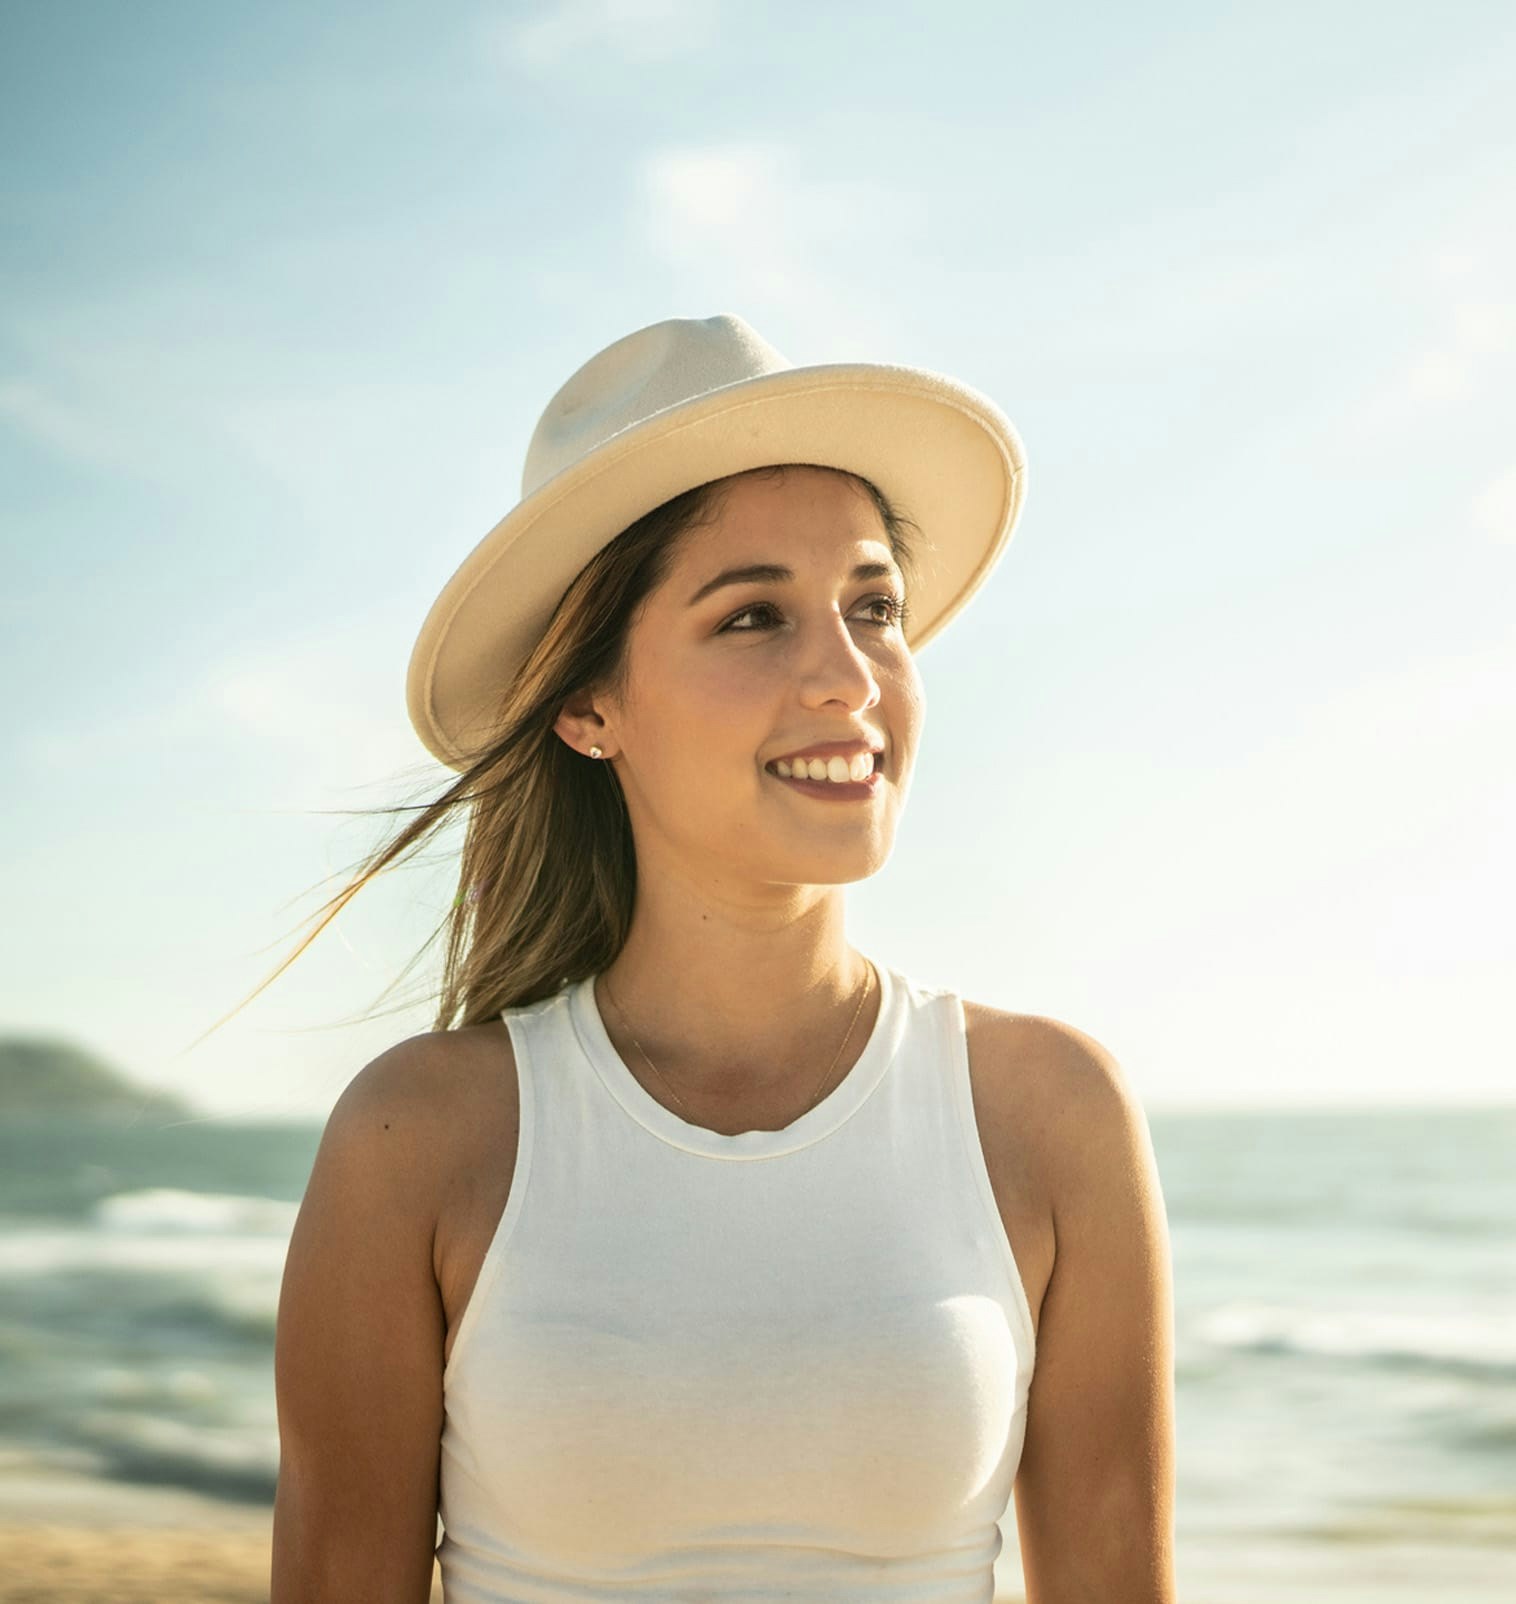 Woman wearing a sunhat walking on the beach